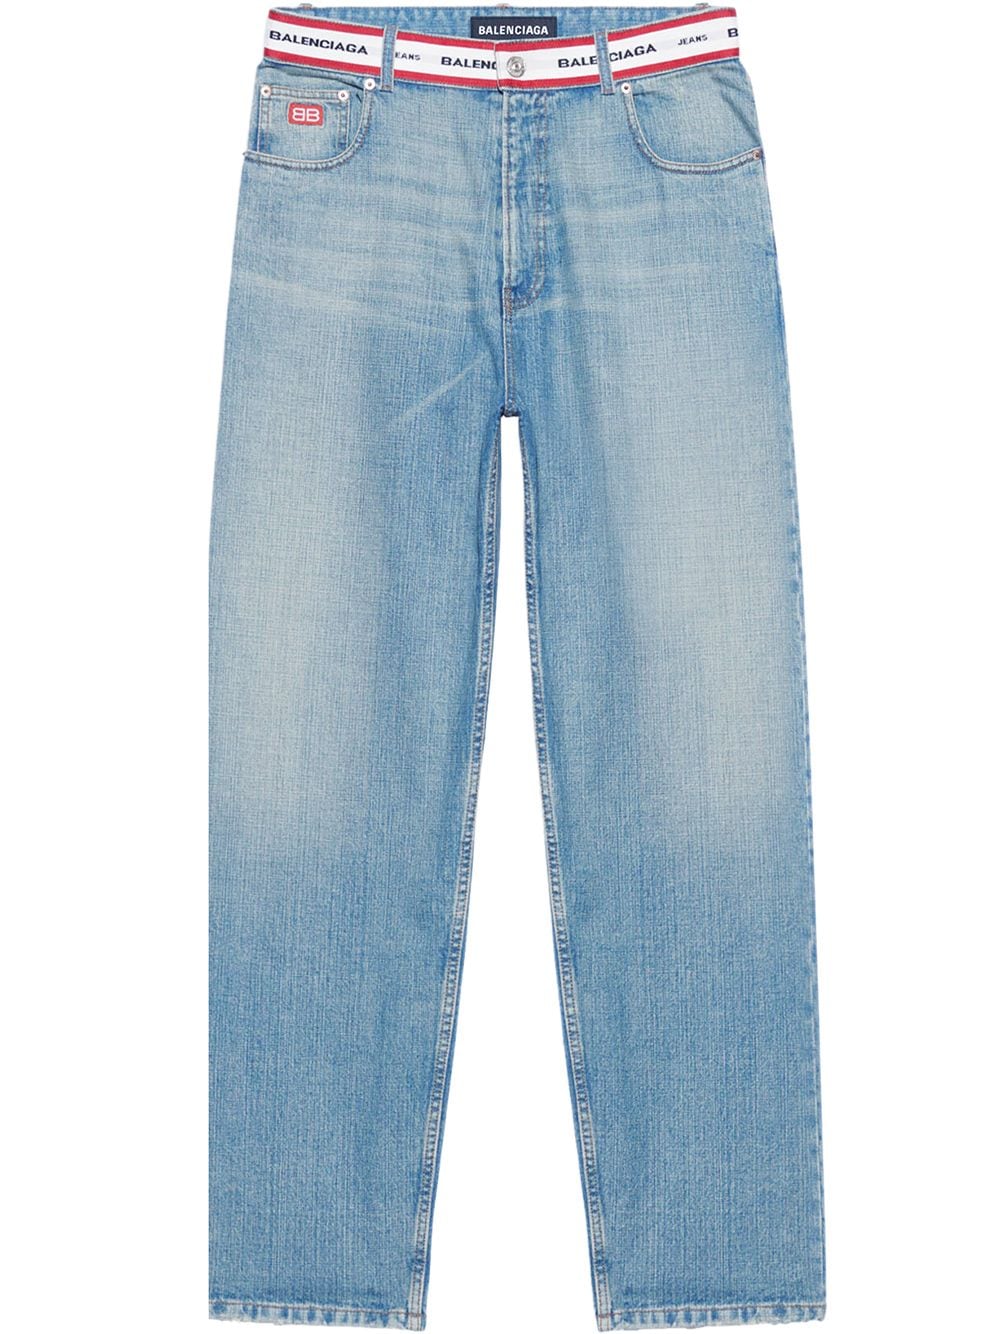 BALENCIAGA Jeans blu in cotone e denim con logo Balenciaga in vita